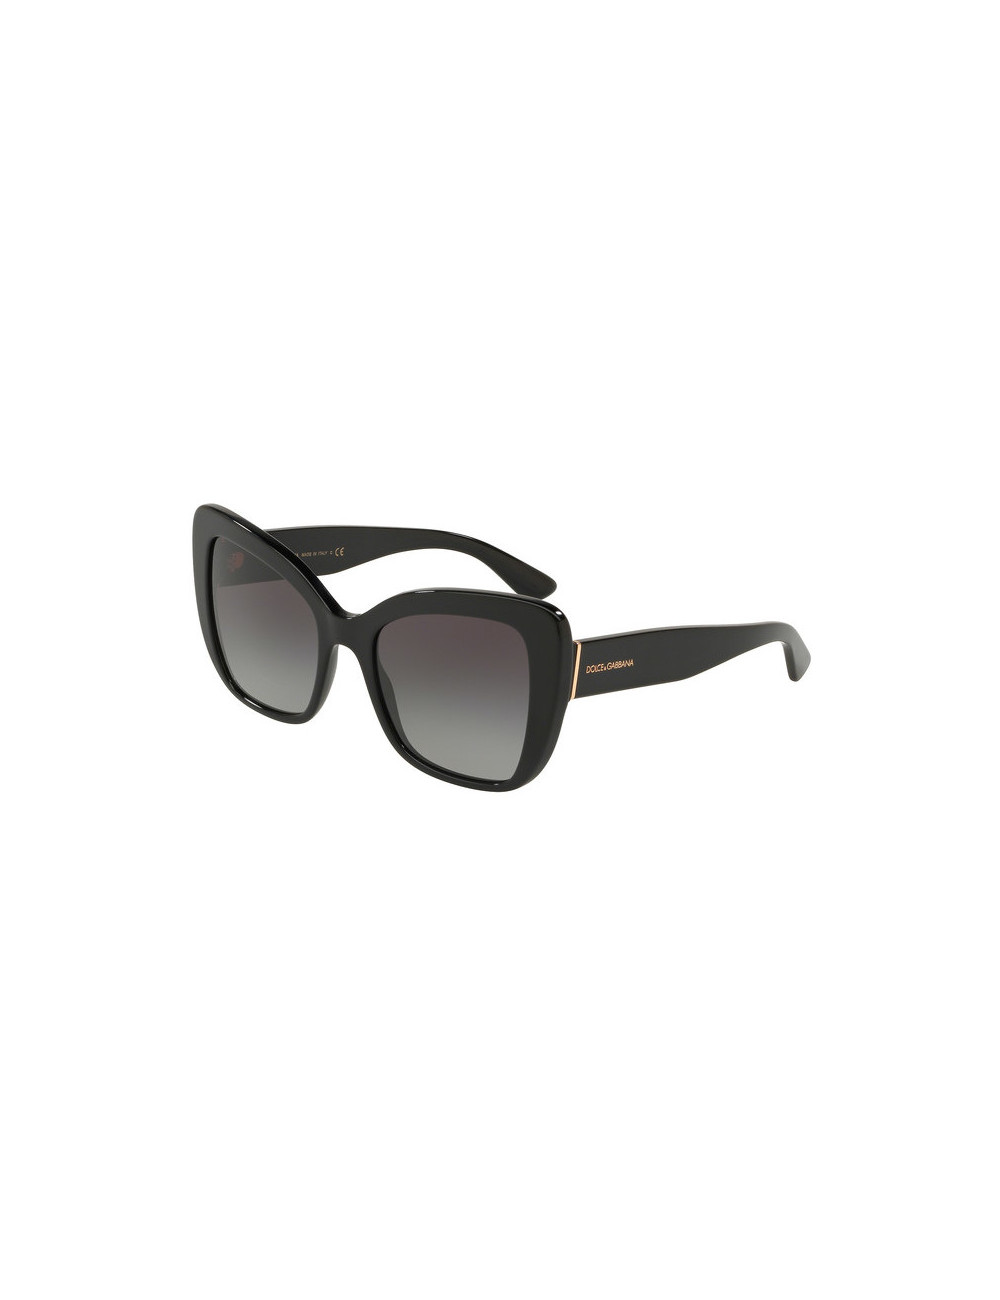 Dolce & Gabbana DG4348 501 women sunglasses – 